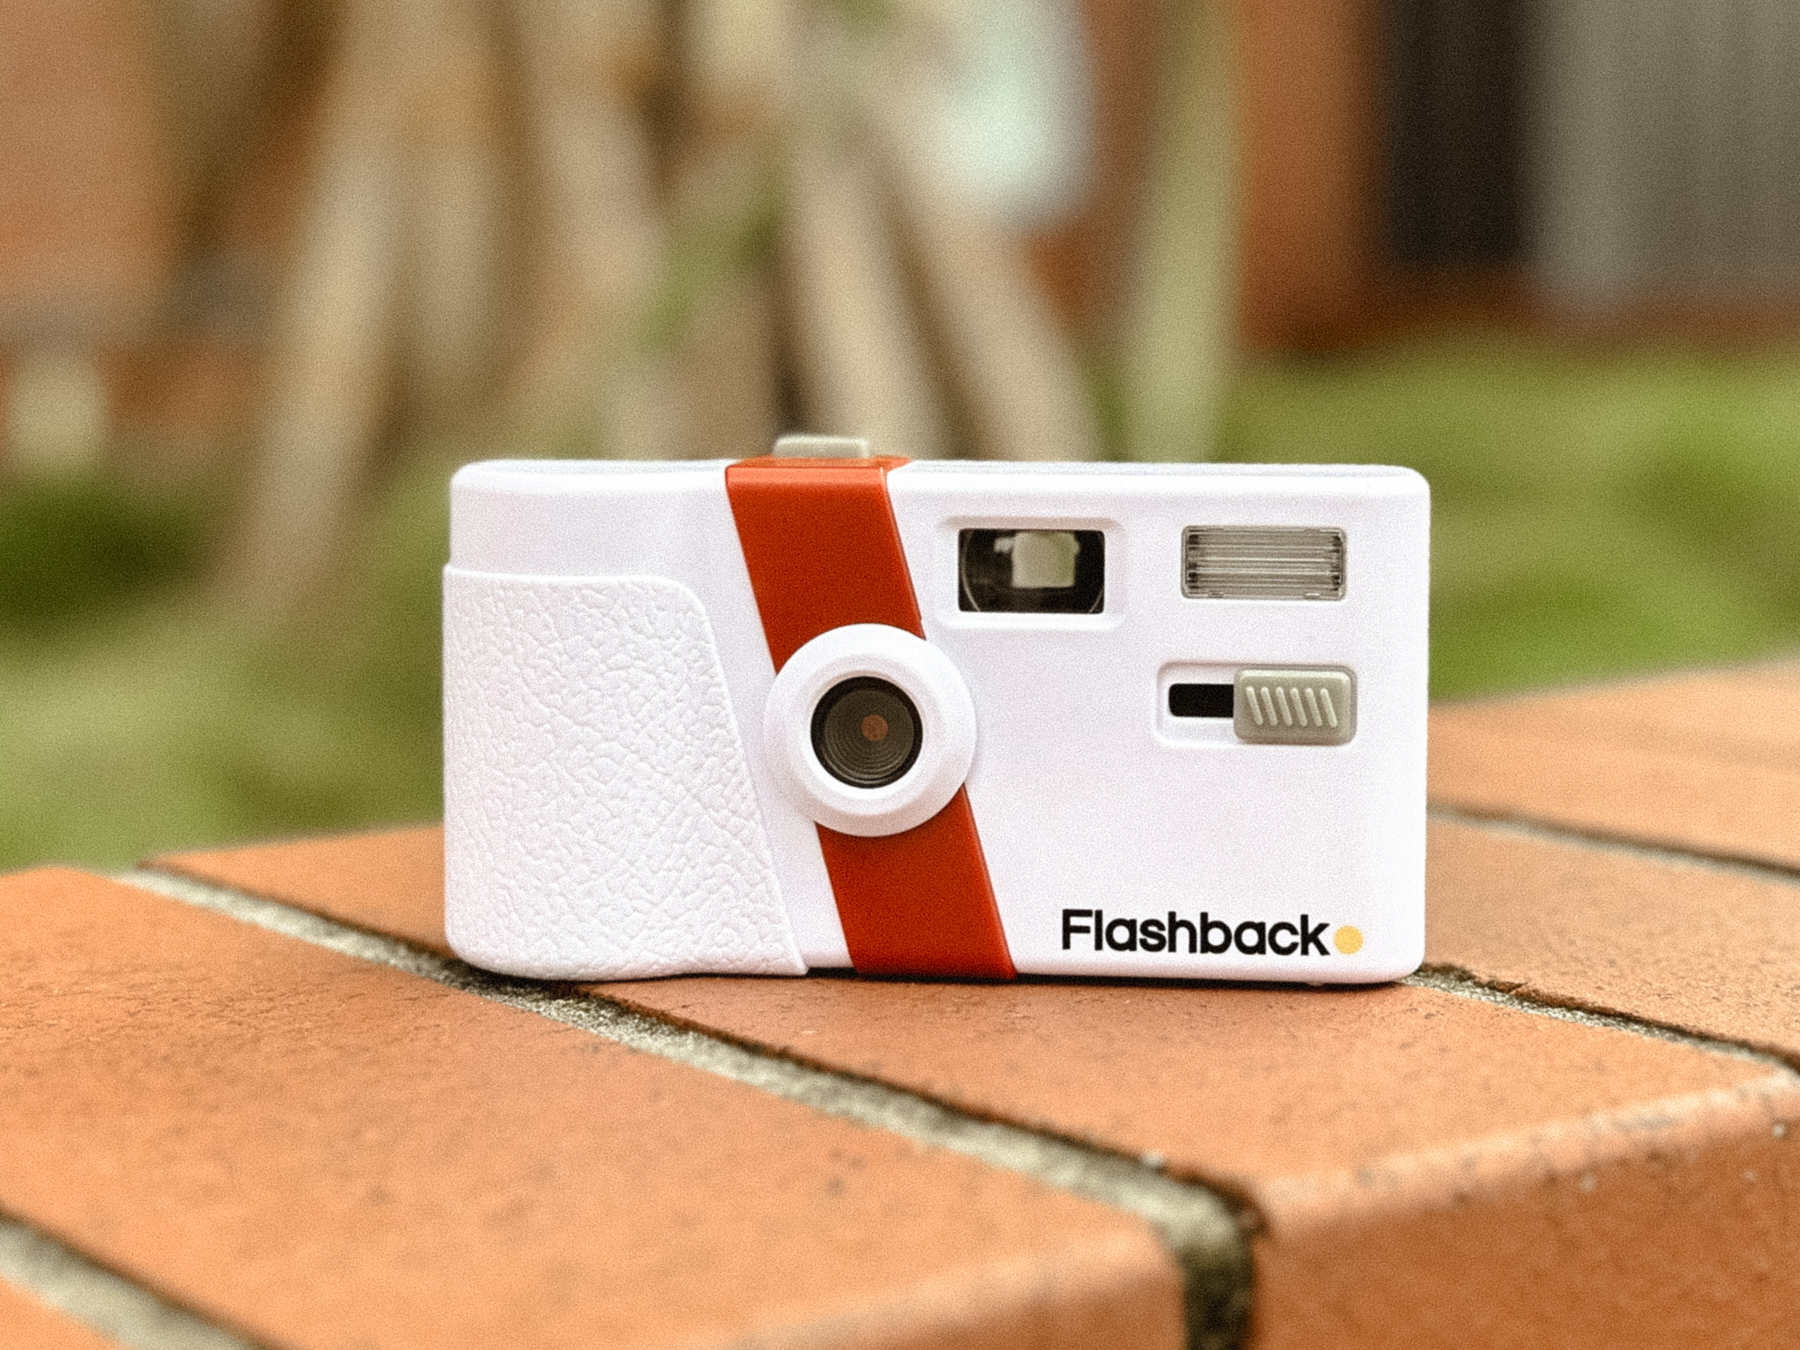 The Flashback camera from Kickstarter